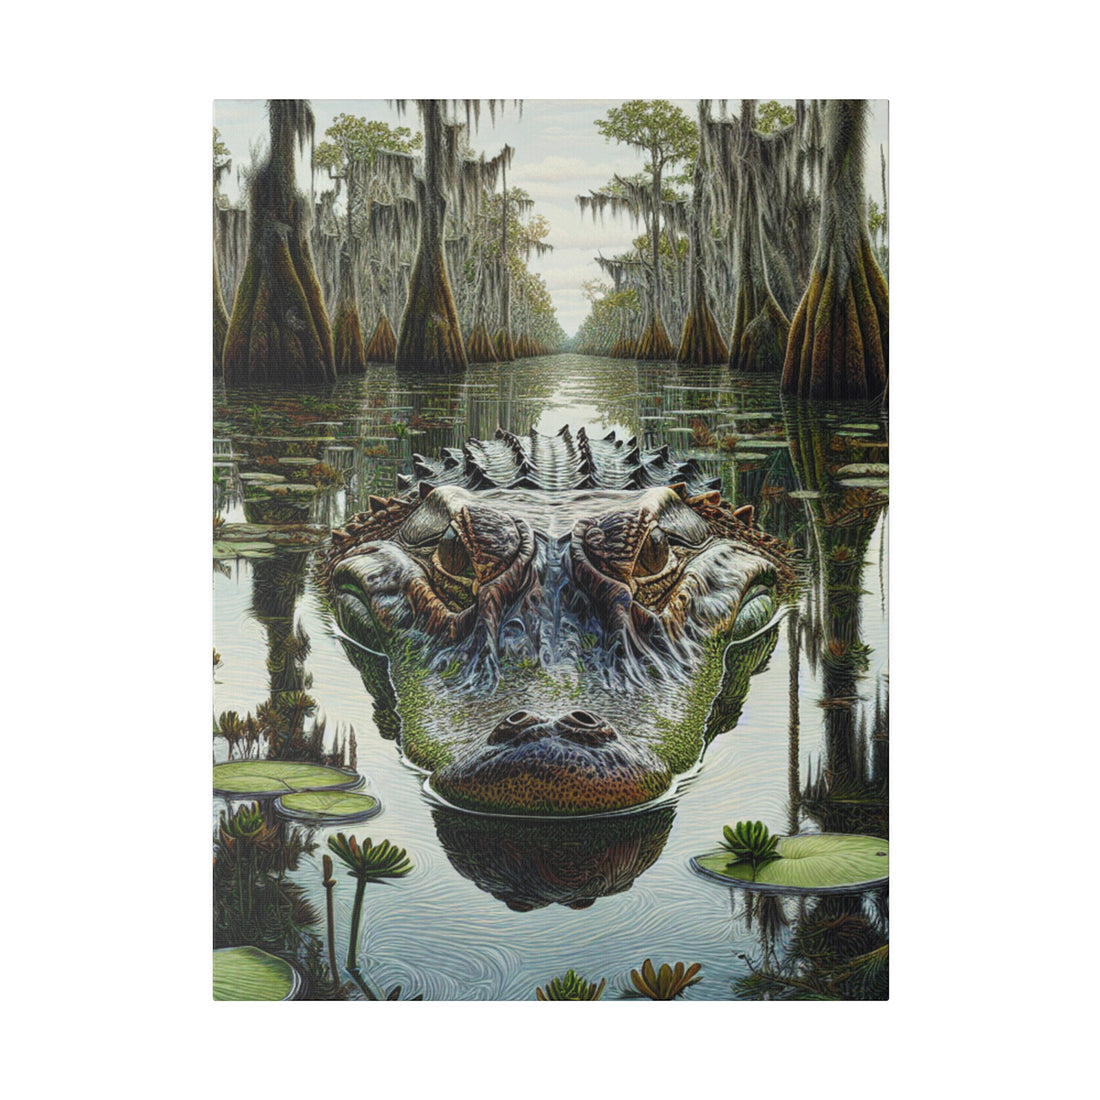 "Alligator Elegance: Exquisite Canvas Wall Art"